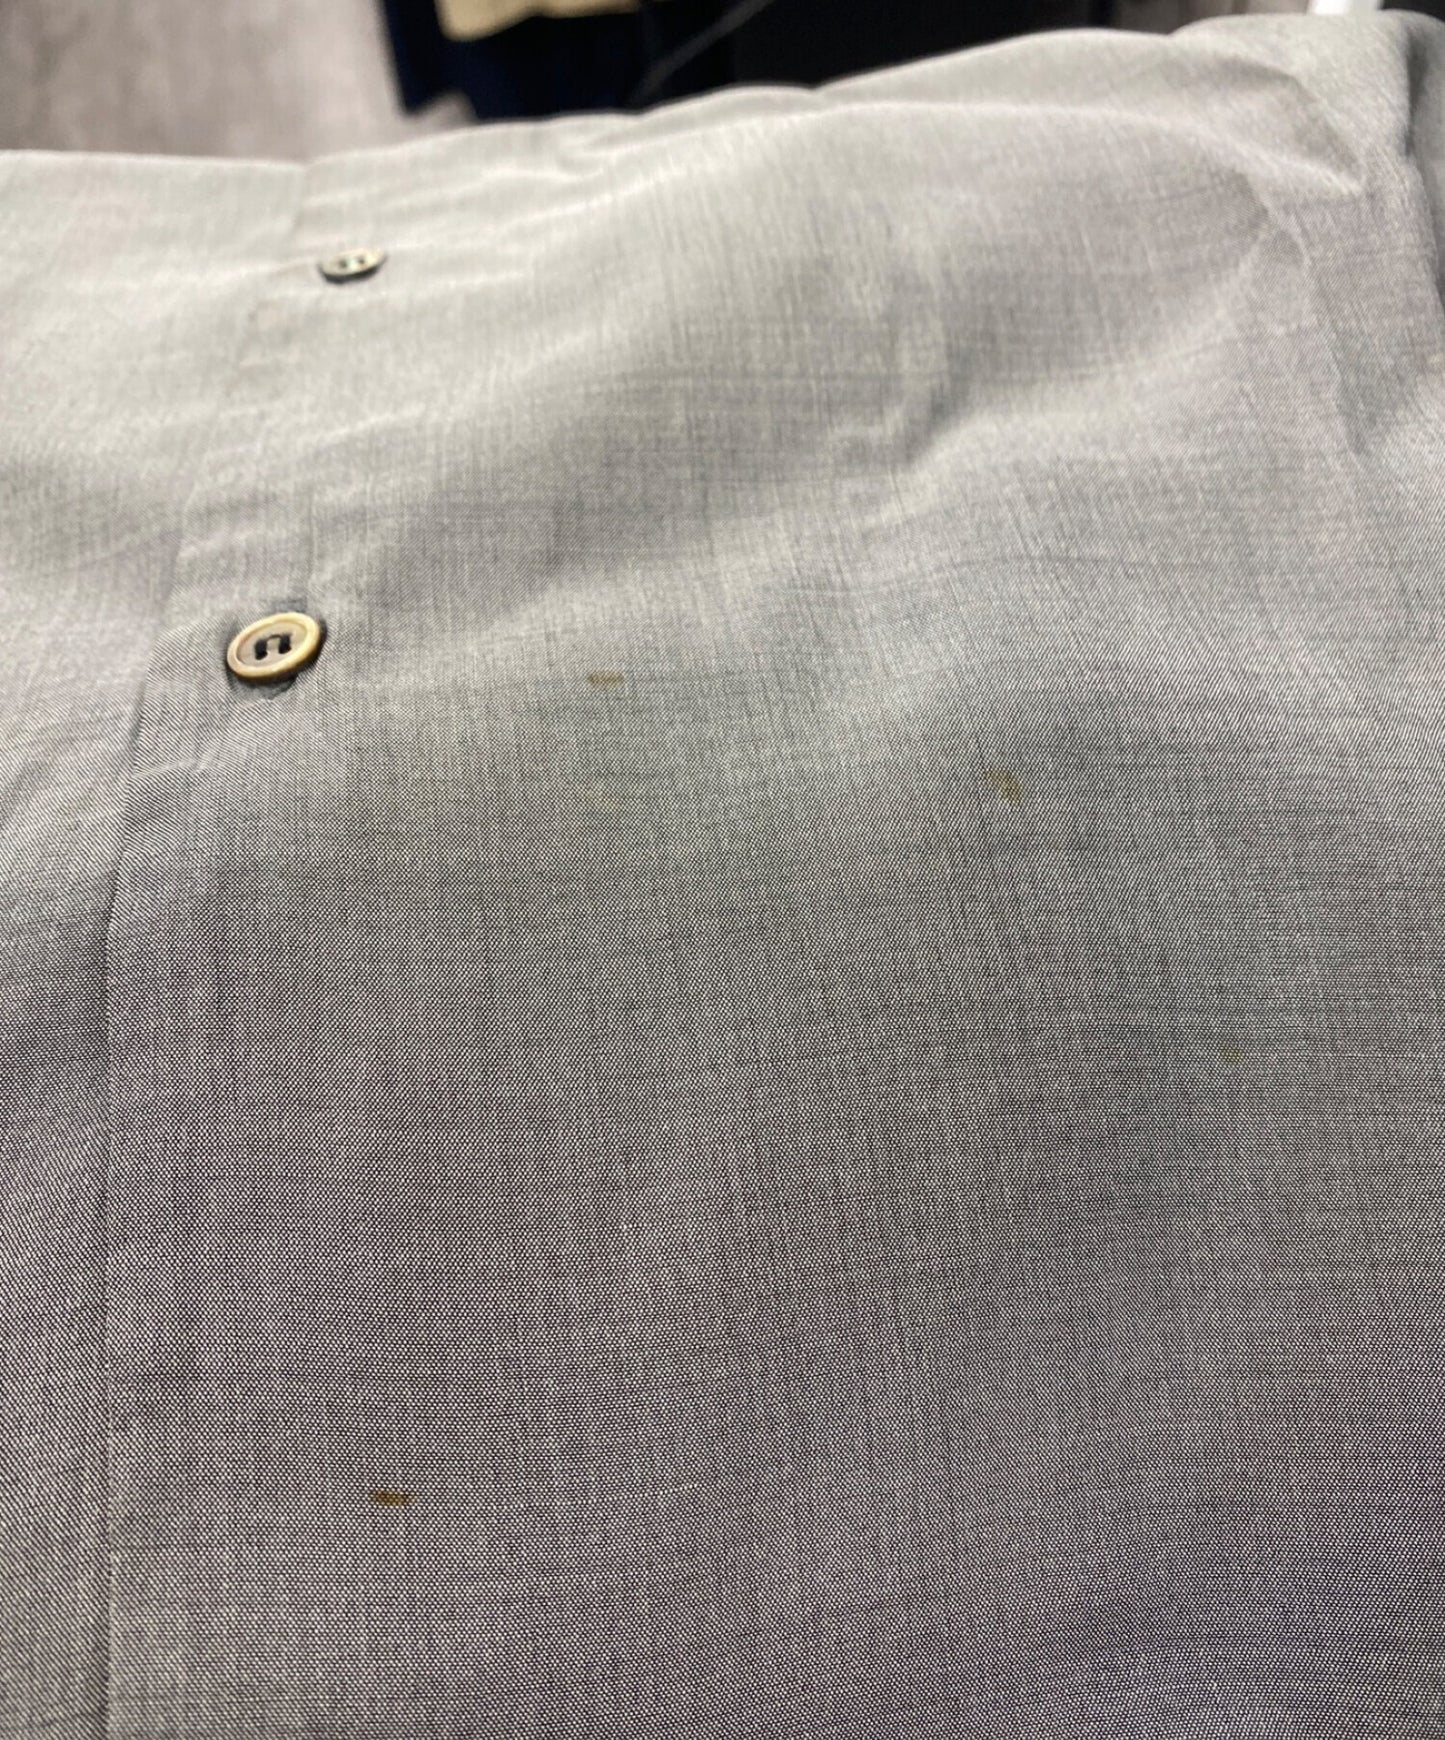 Comme des Garcons Homme Plus เสื้อเชิ้ตคอลลาร์เปิด Silk Poly AD1997 ปกปลอกคอการออกแบบการออกแบบ PB-100130